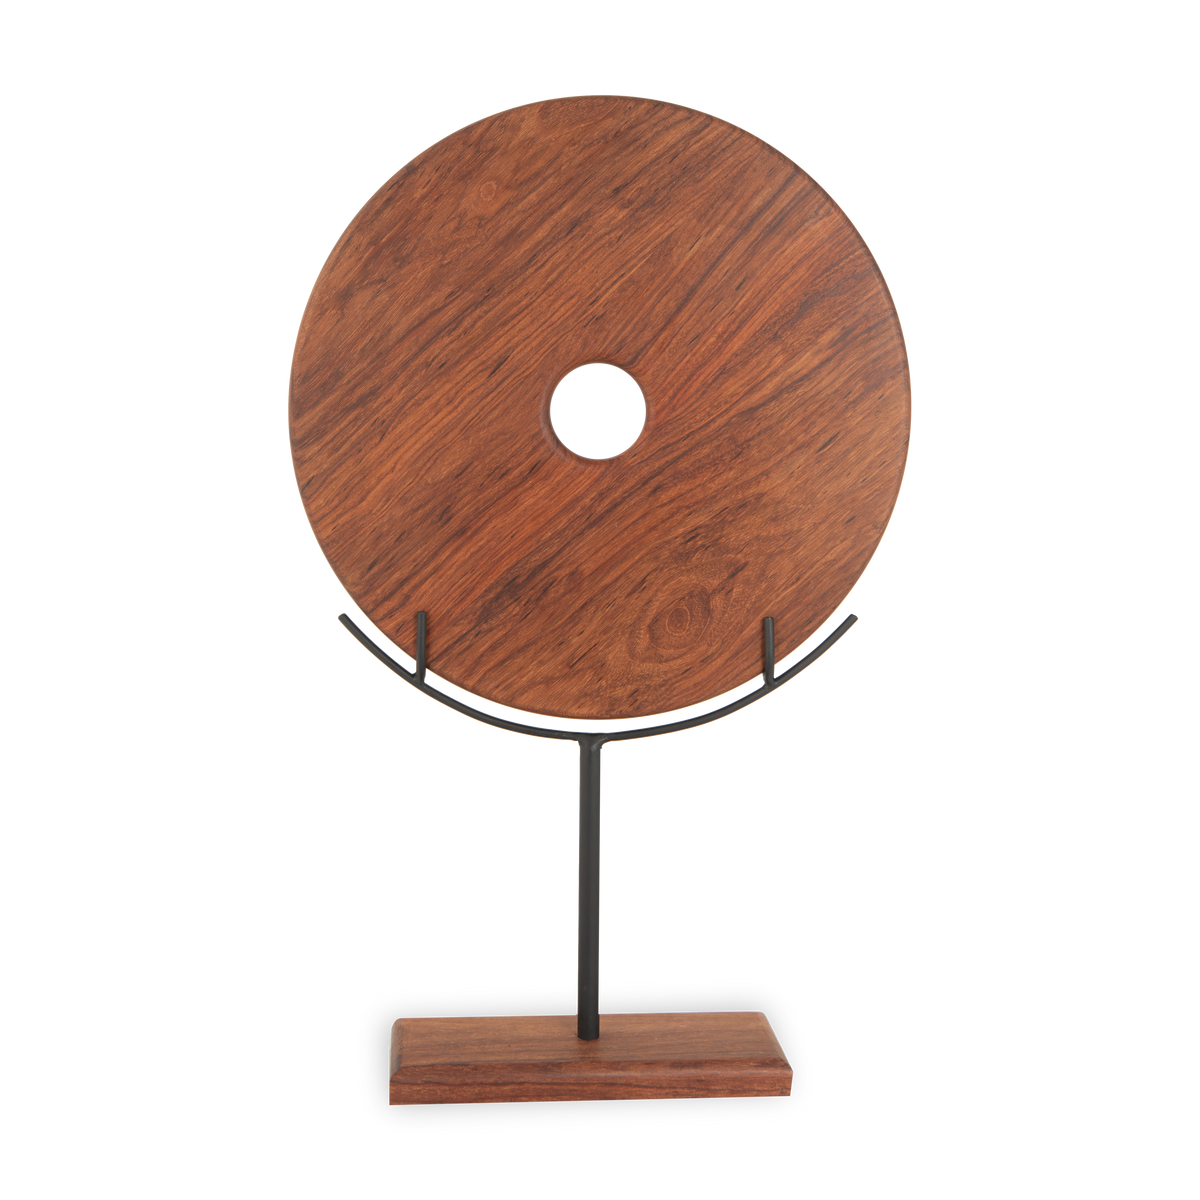 Wood Disk Sculpture